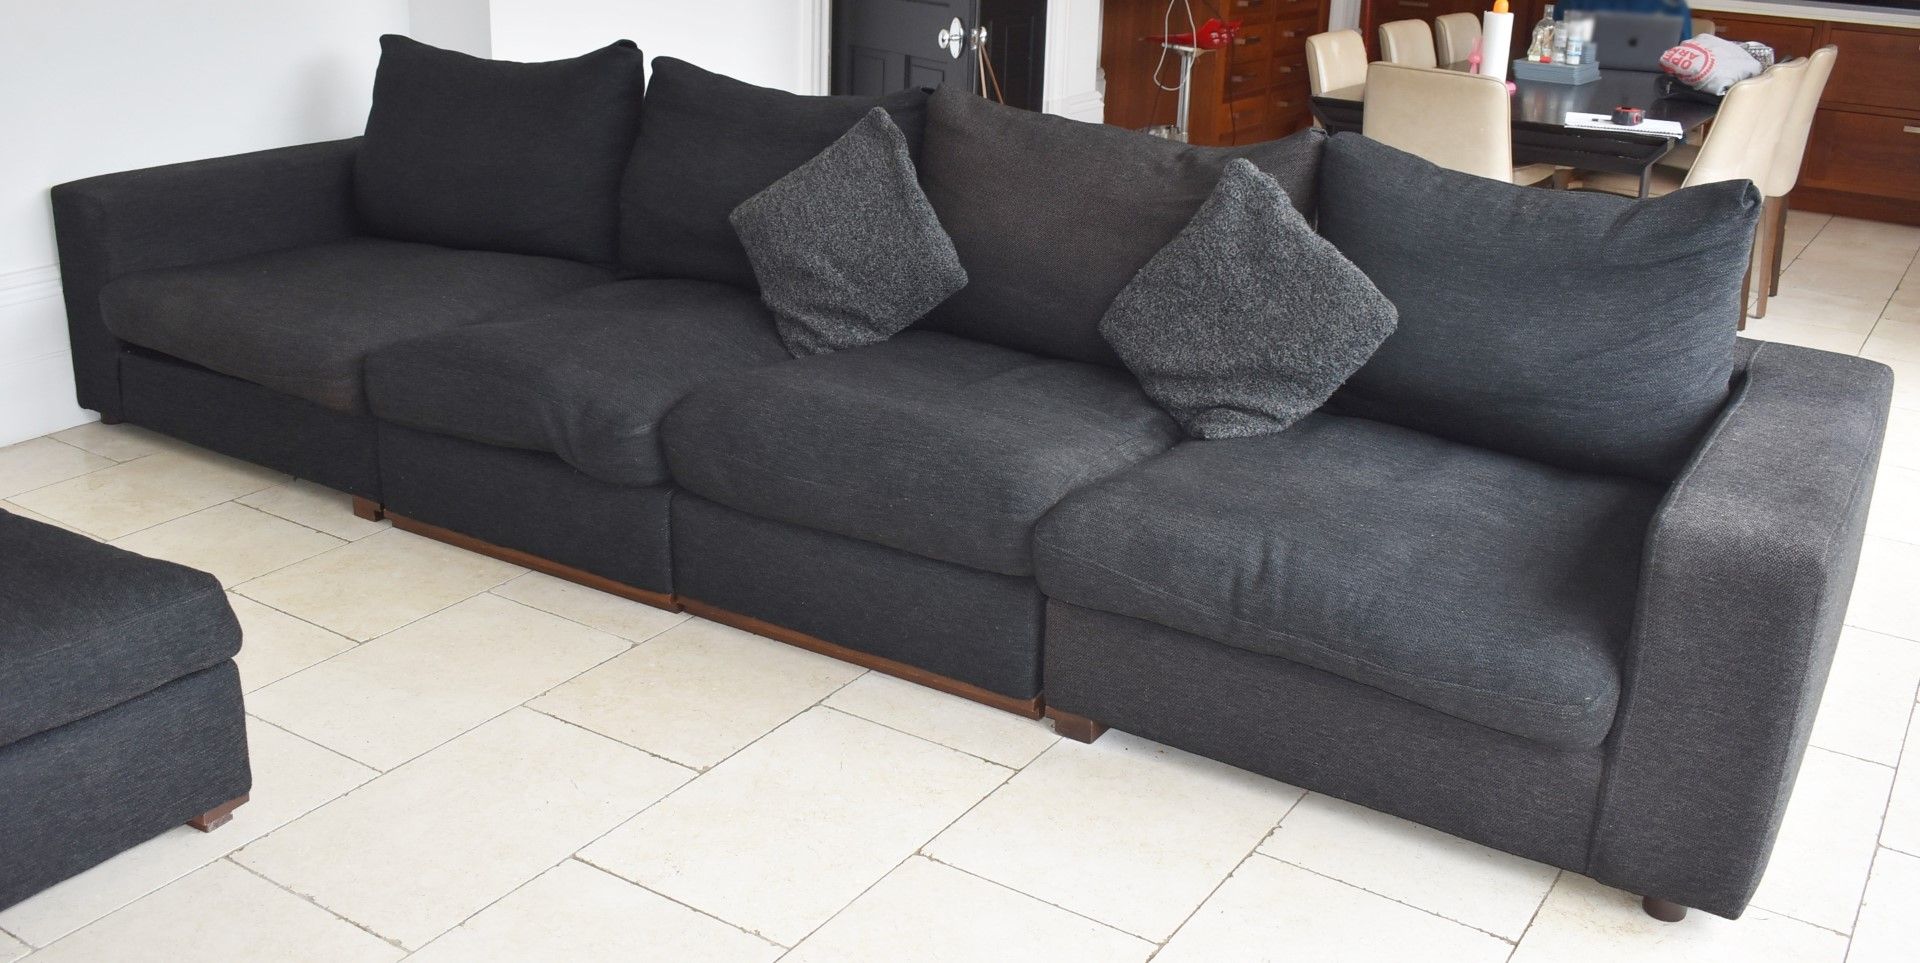 1 x Large Corner Sofa Upholstered in Dark Grey Grey Fabric - Inc Footstool - NO VAT ON THE HAMMER!